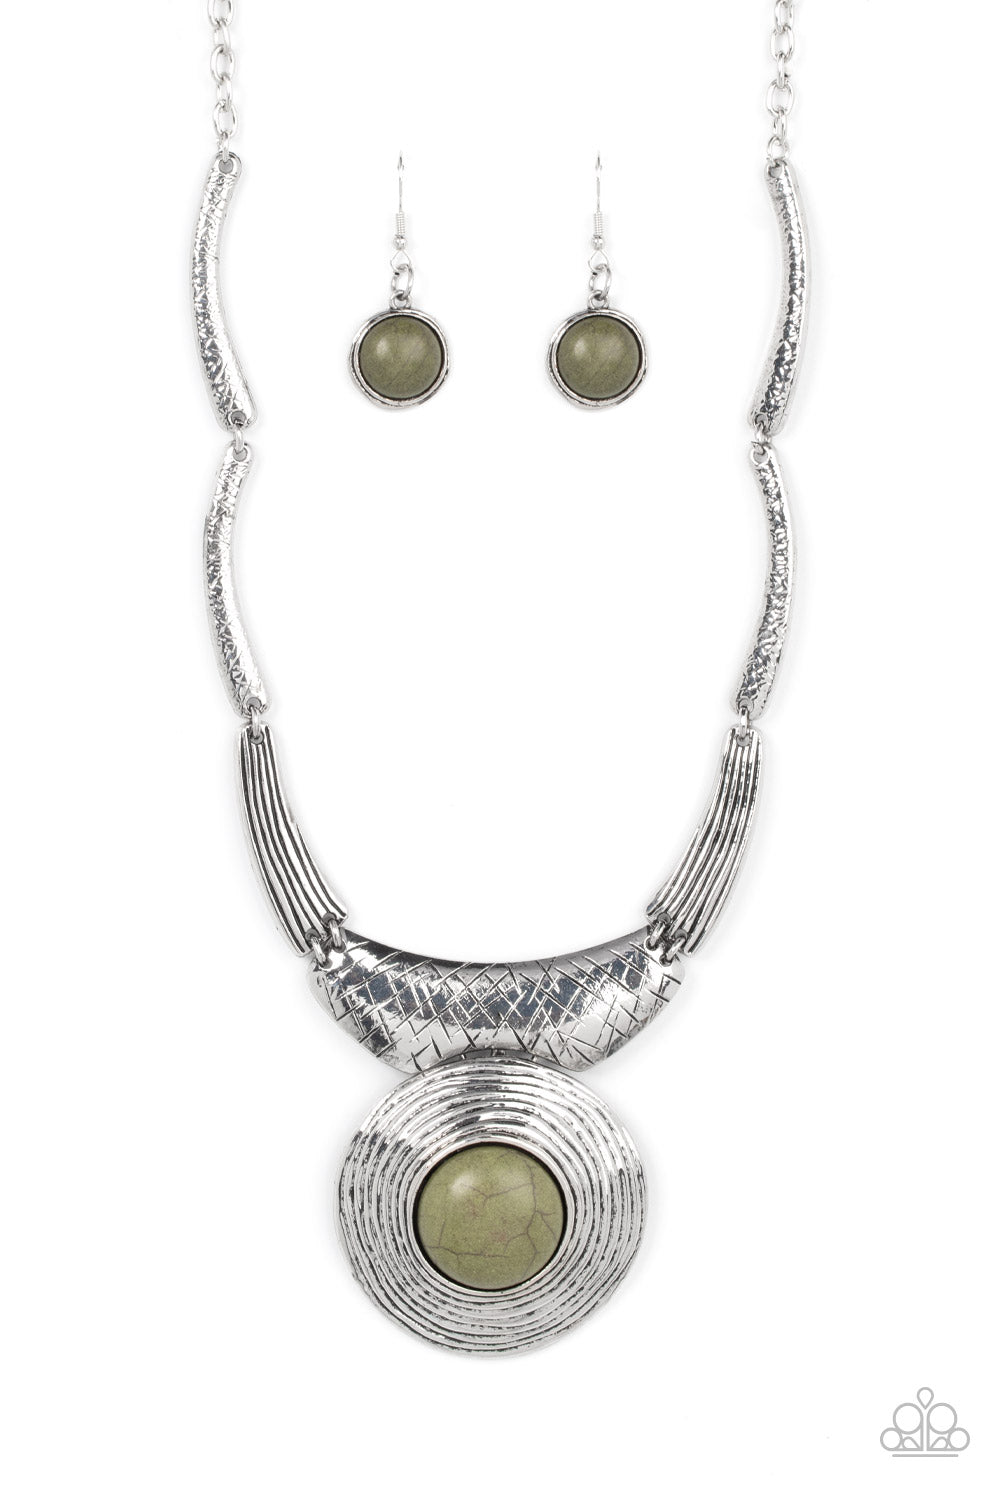 EMPRESS-ive Resume - Green Stone Necklace Set - Princess Glam Shop